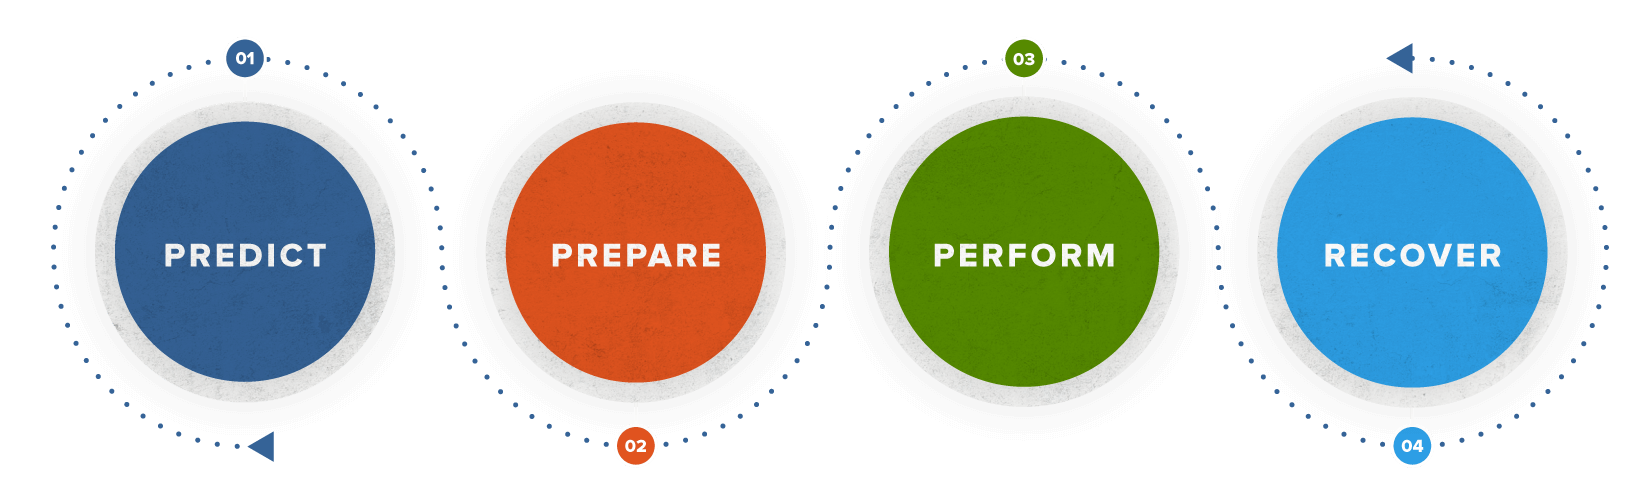 Agile Business Athlete concept Predict, Prepare, Perform, Recover in circles